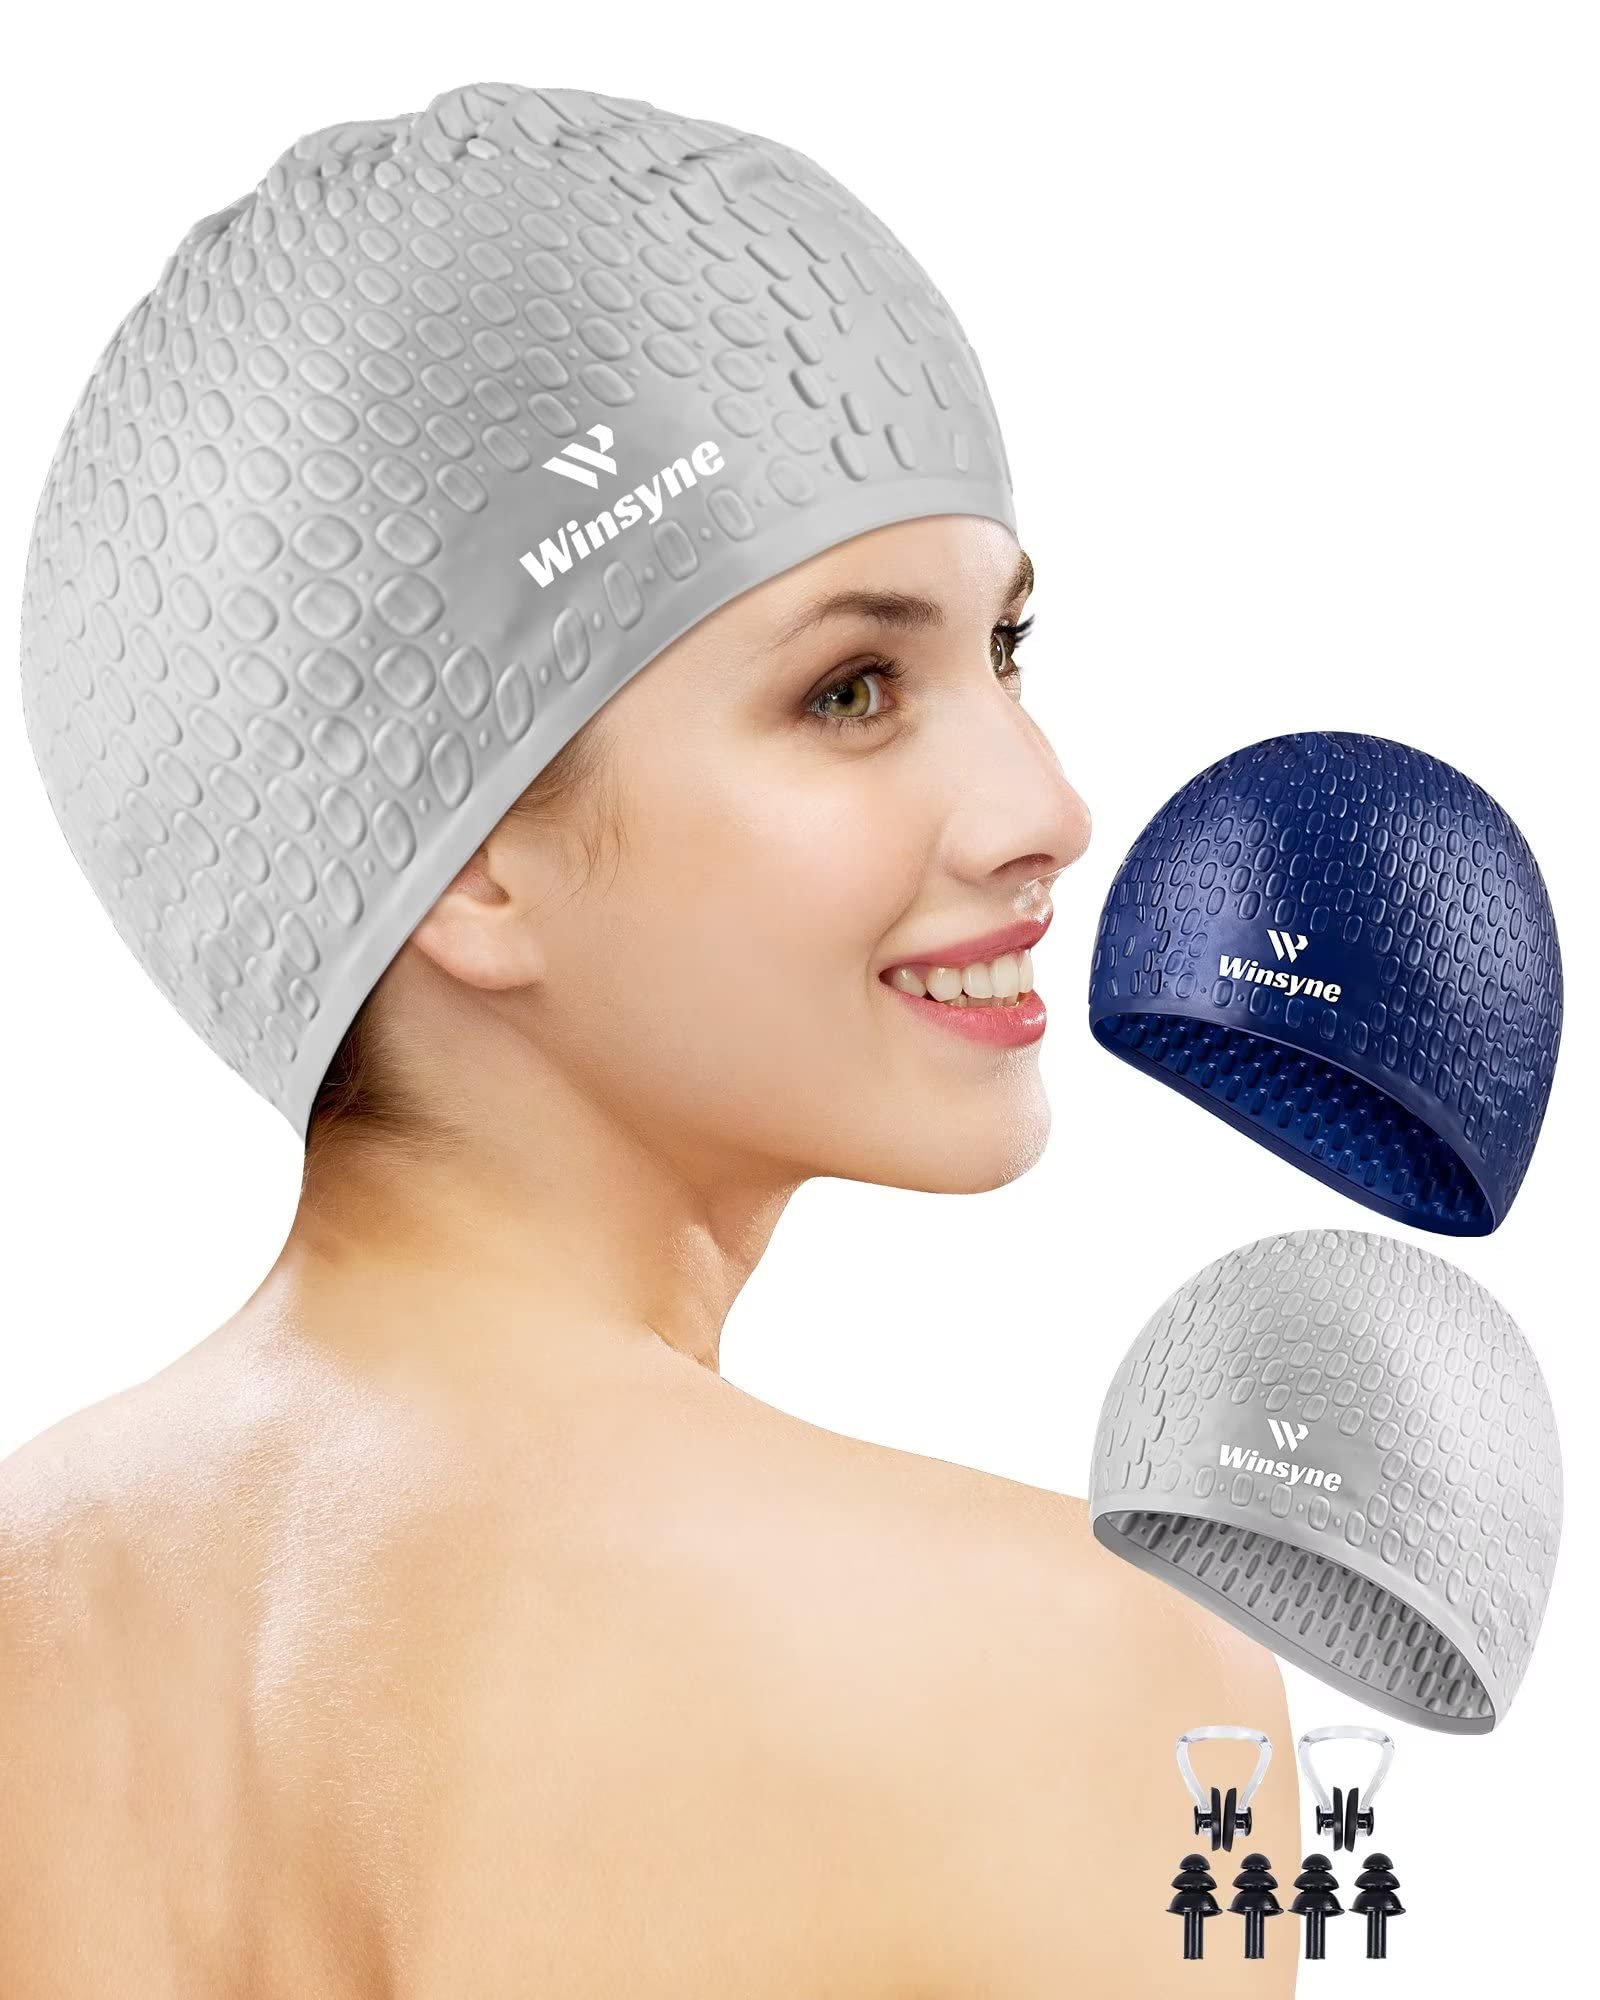 Winsyne Swim Caps Best Swim Caps for Keeping Hair Dry